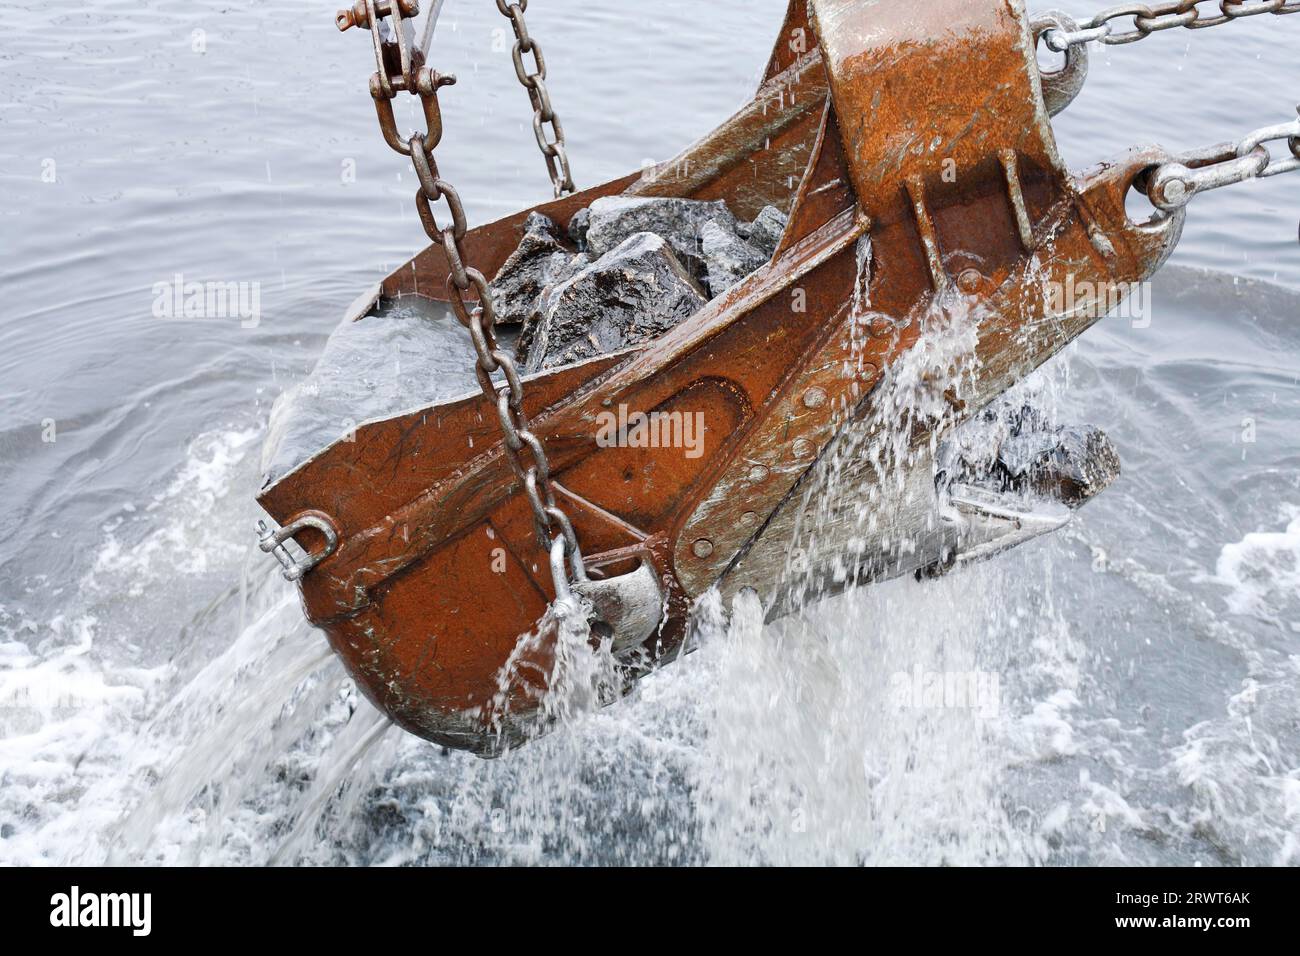 A Dragline excavator bucket dredging in water Stock Photo